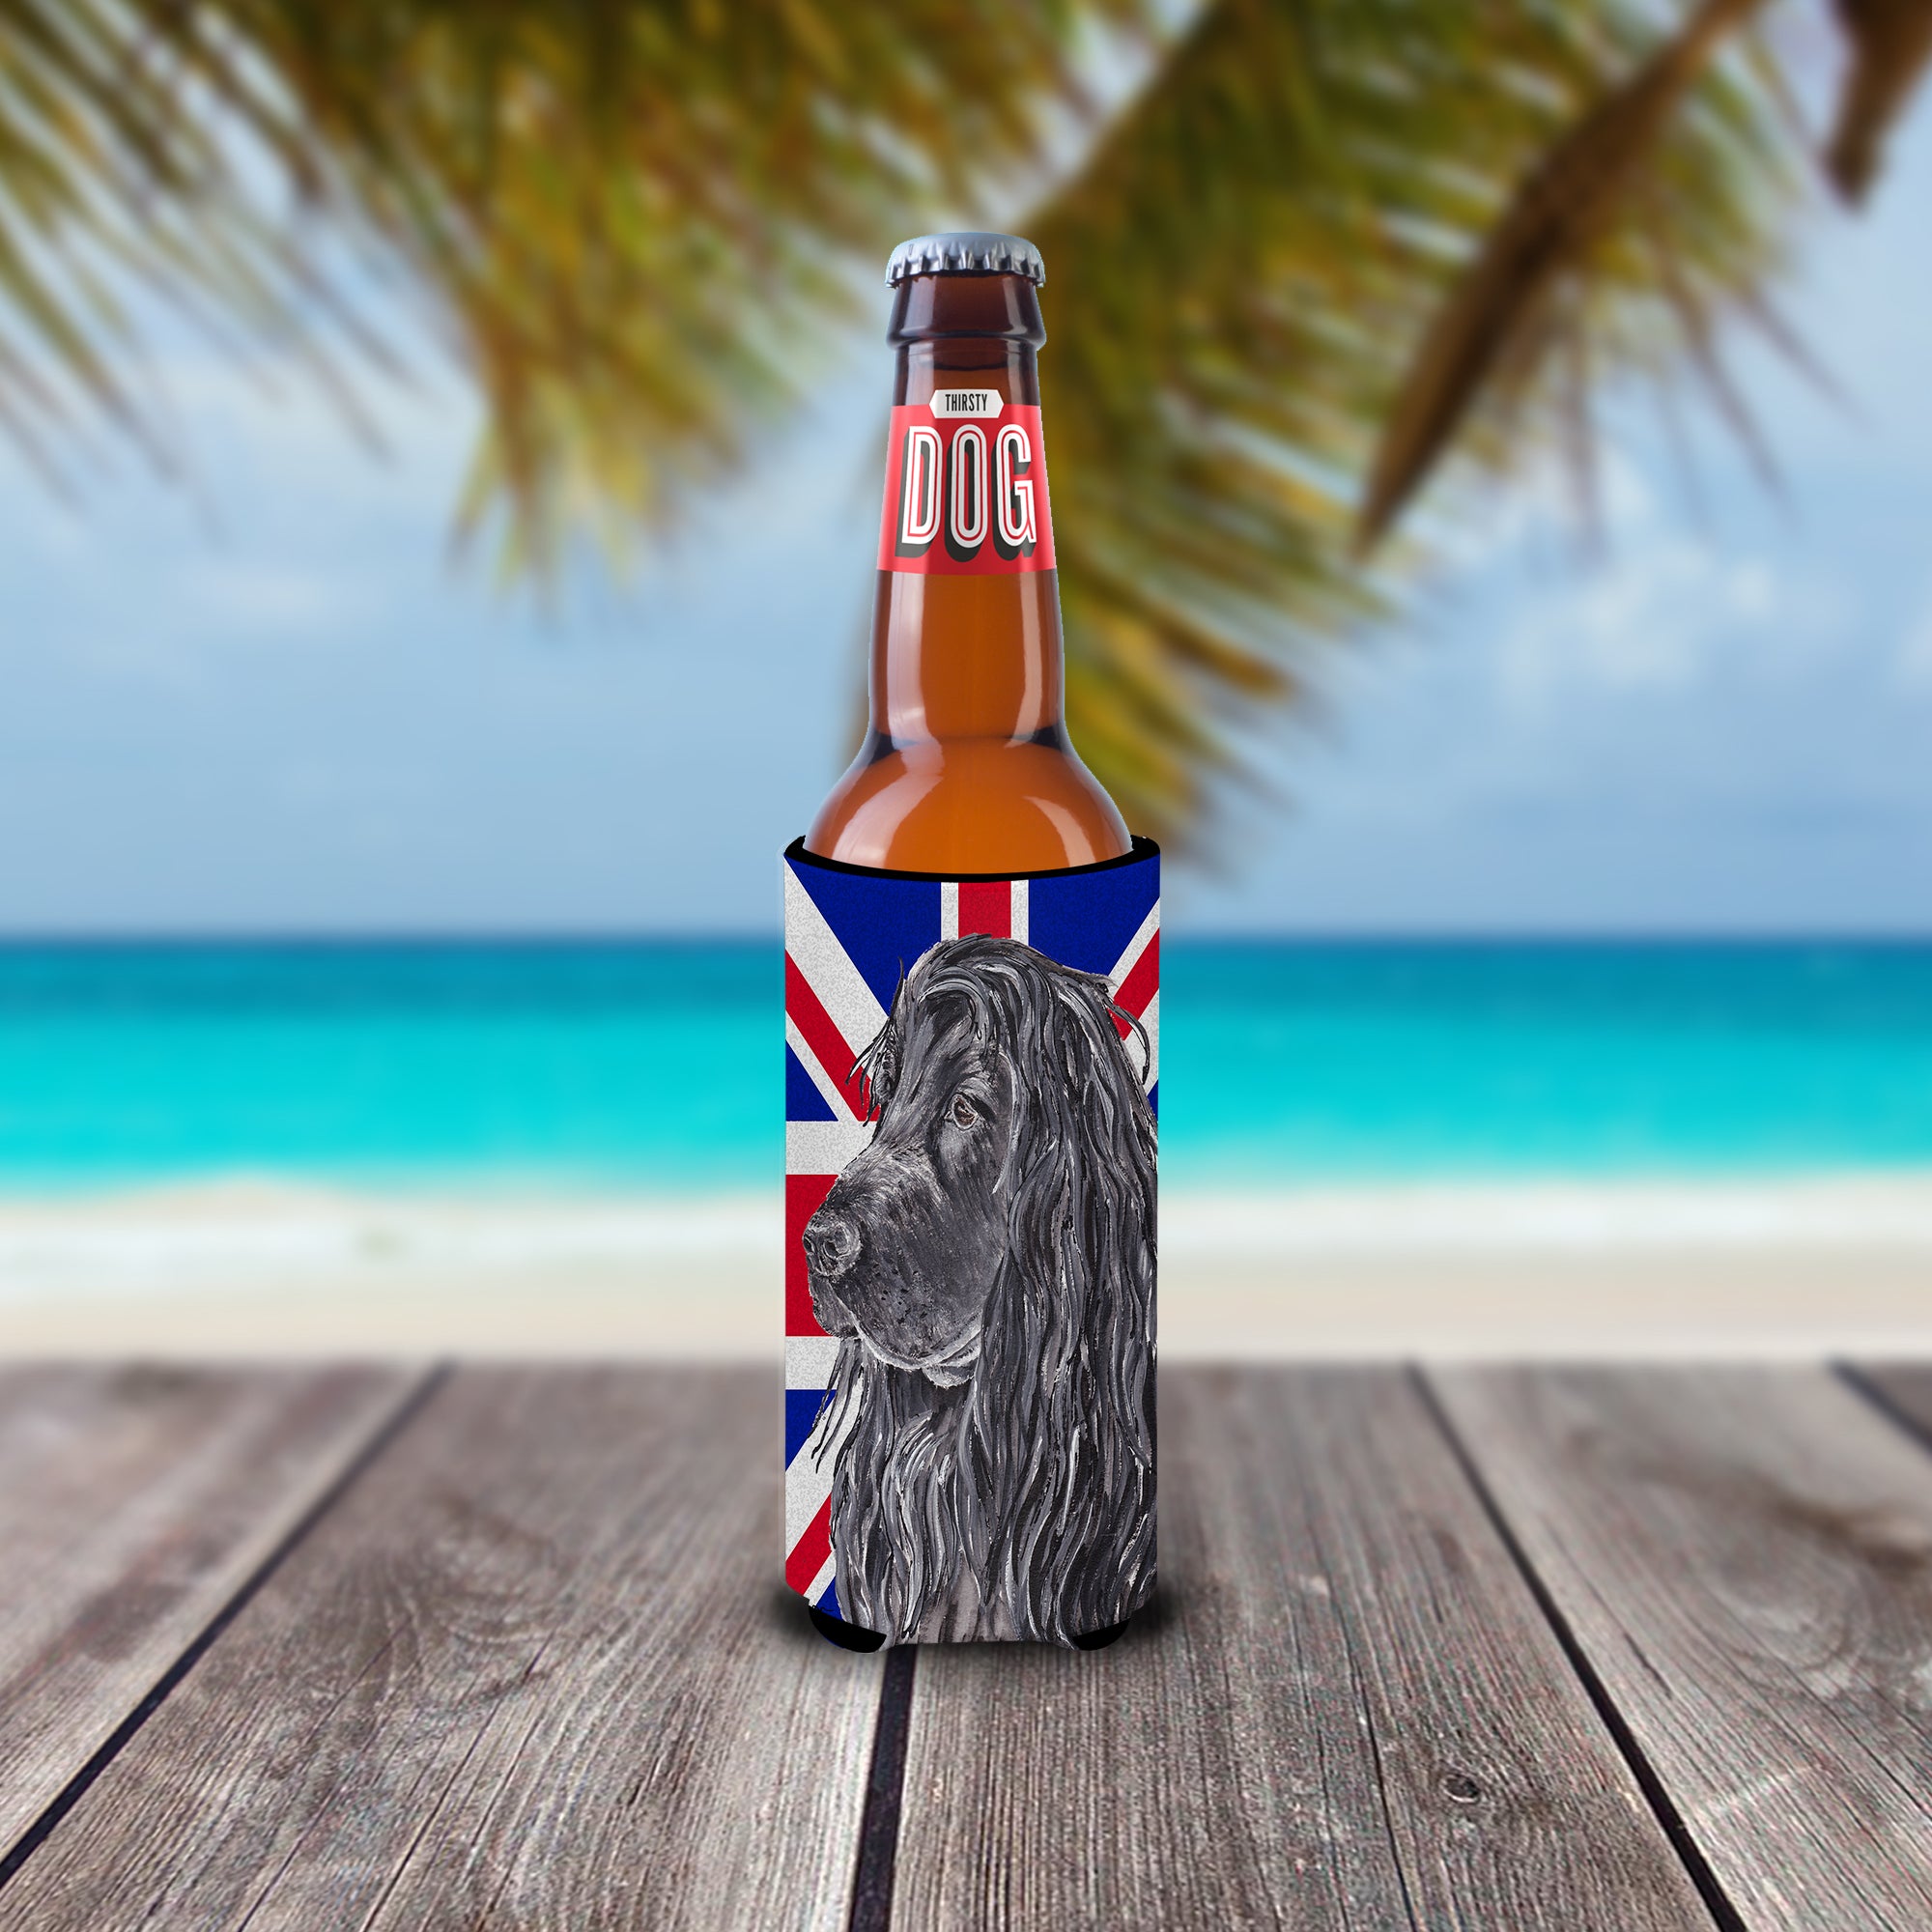 Black Cocker Spaniel with Engish Union Jack British Flag Ultra Beverage Insulators for slim cans SC9867MUK.